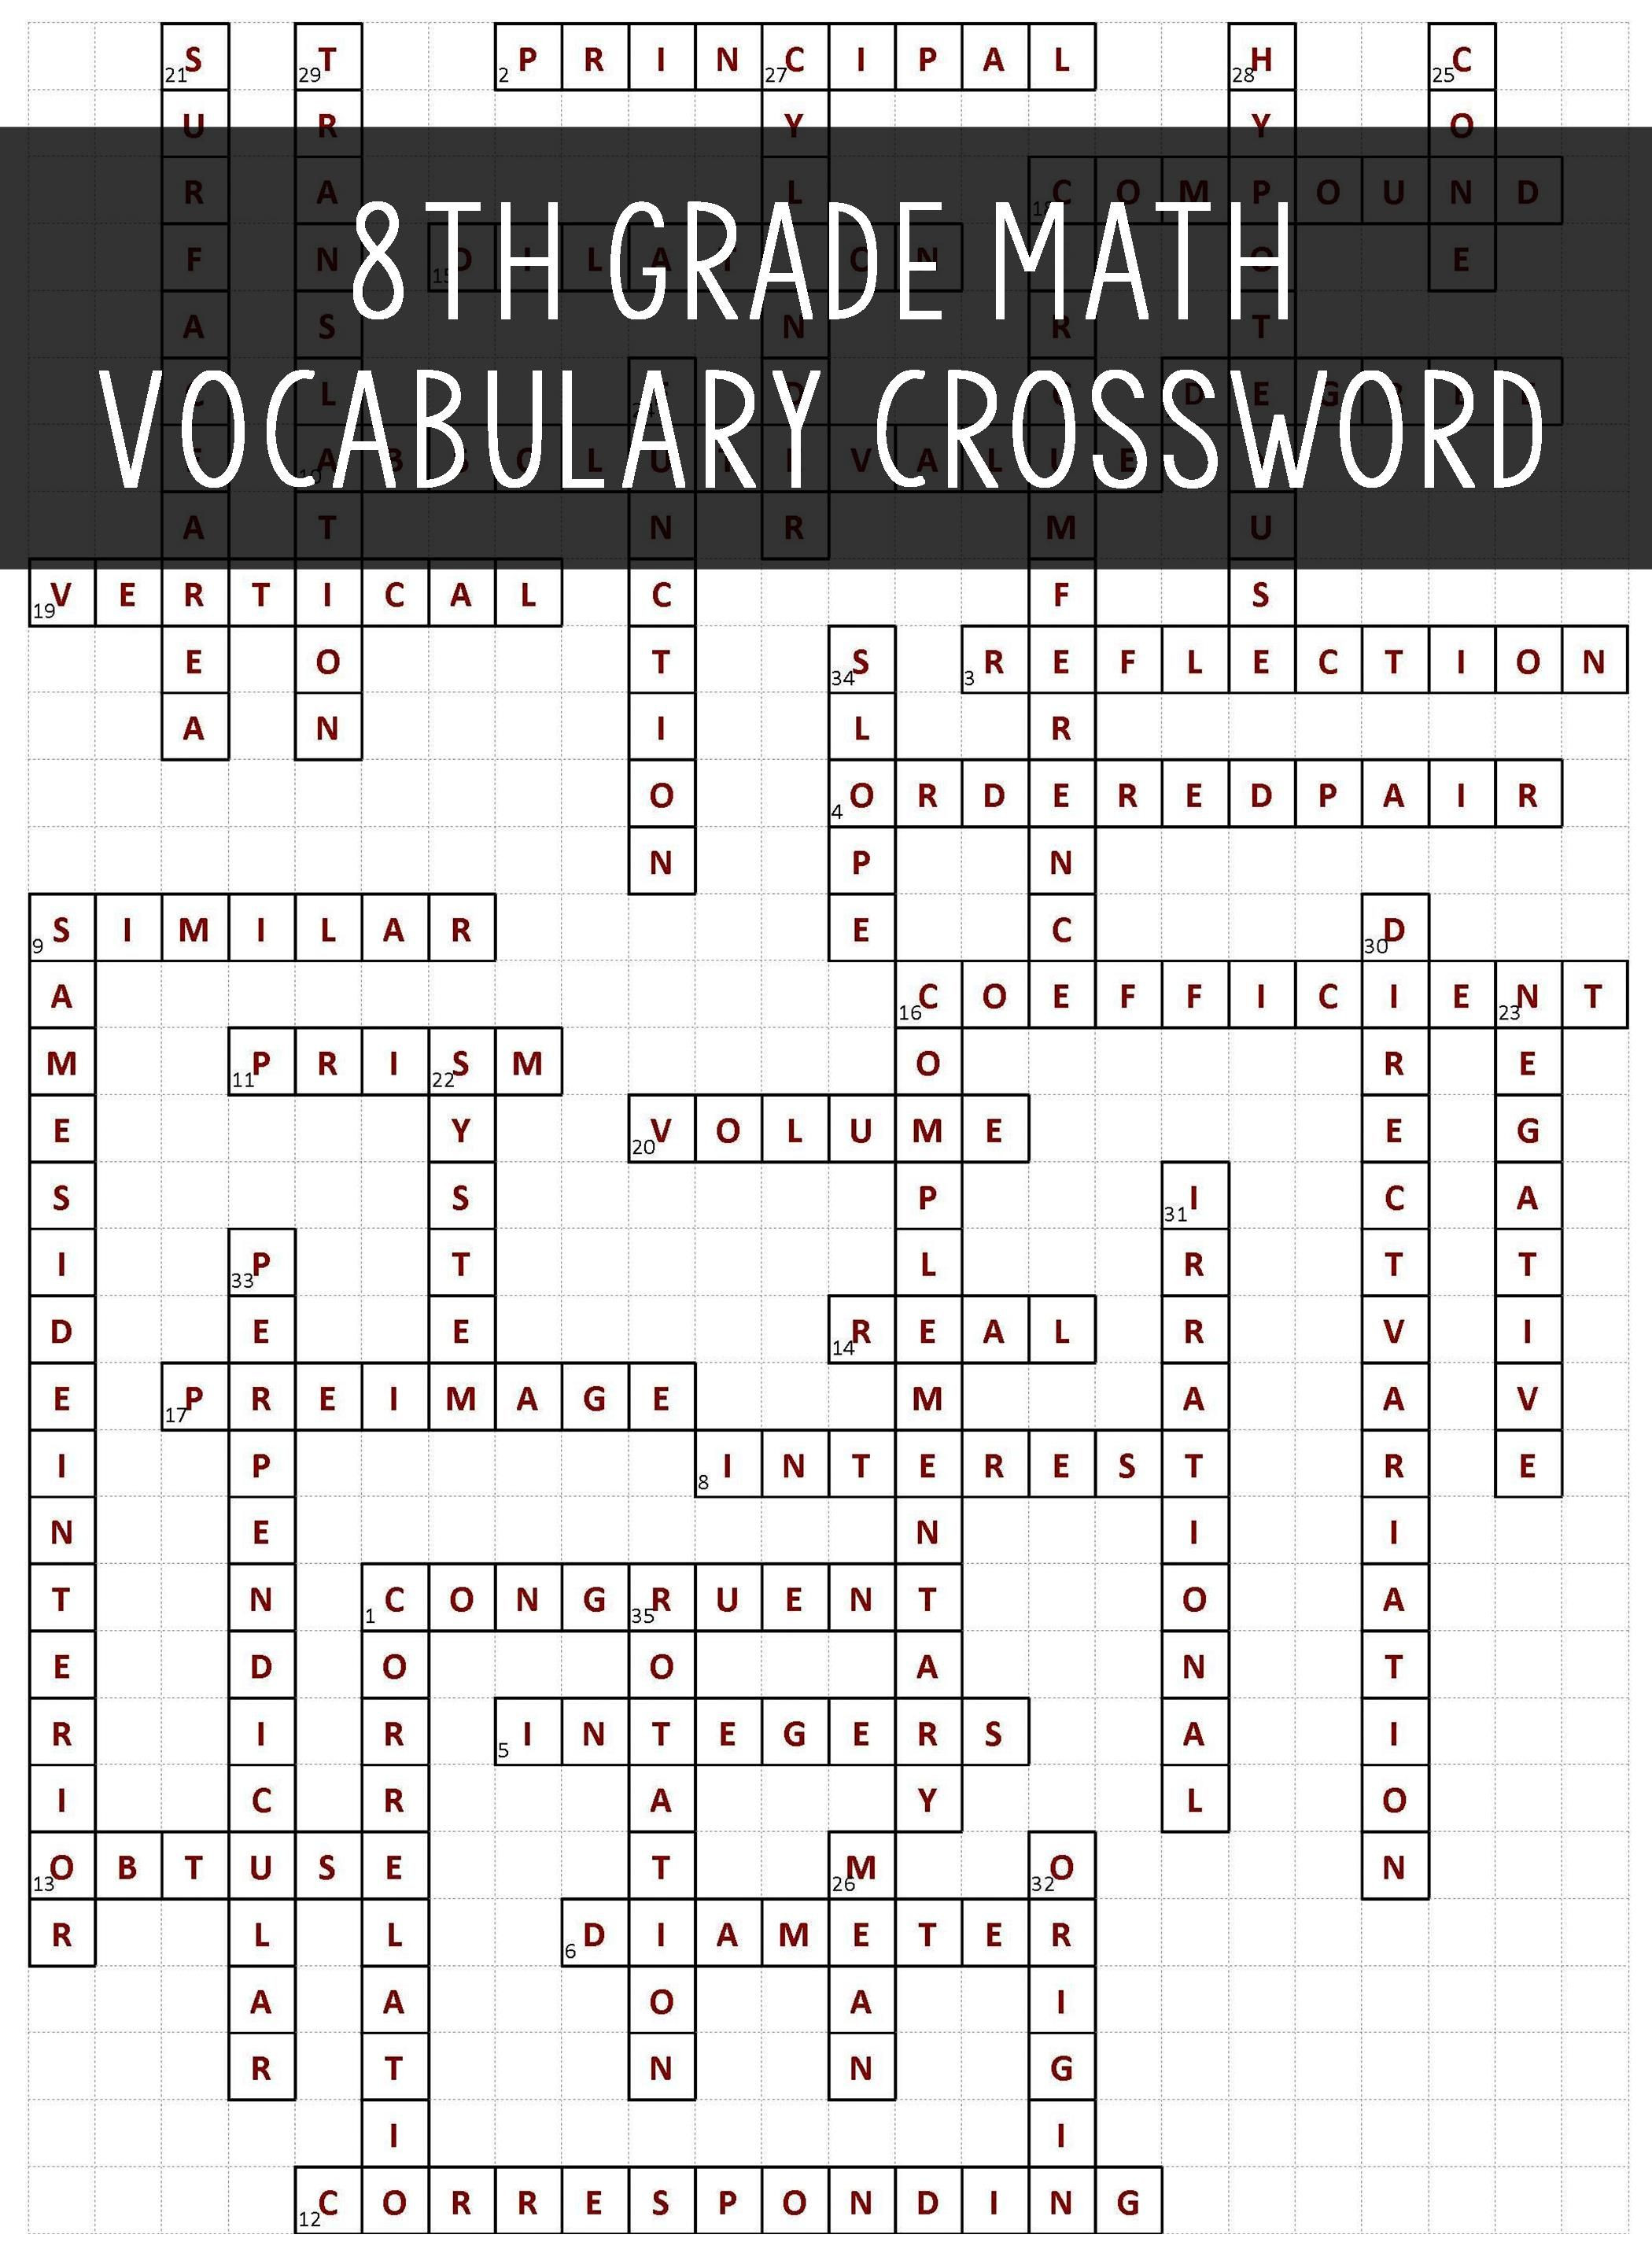 8th Grade Math Vocabulary Crossword 8th Grade Math Vocabulary Crossword